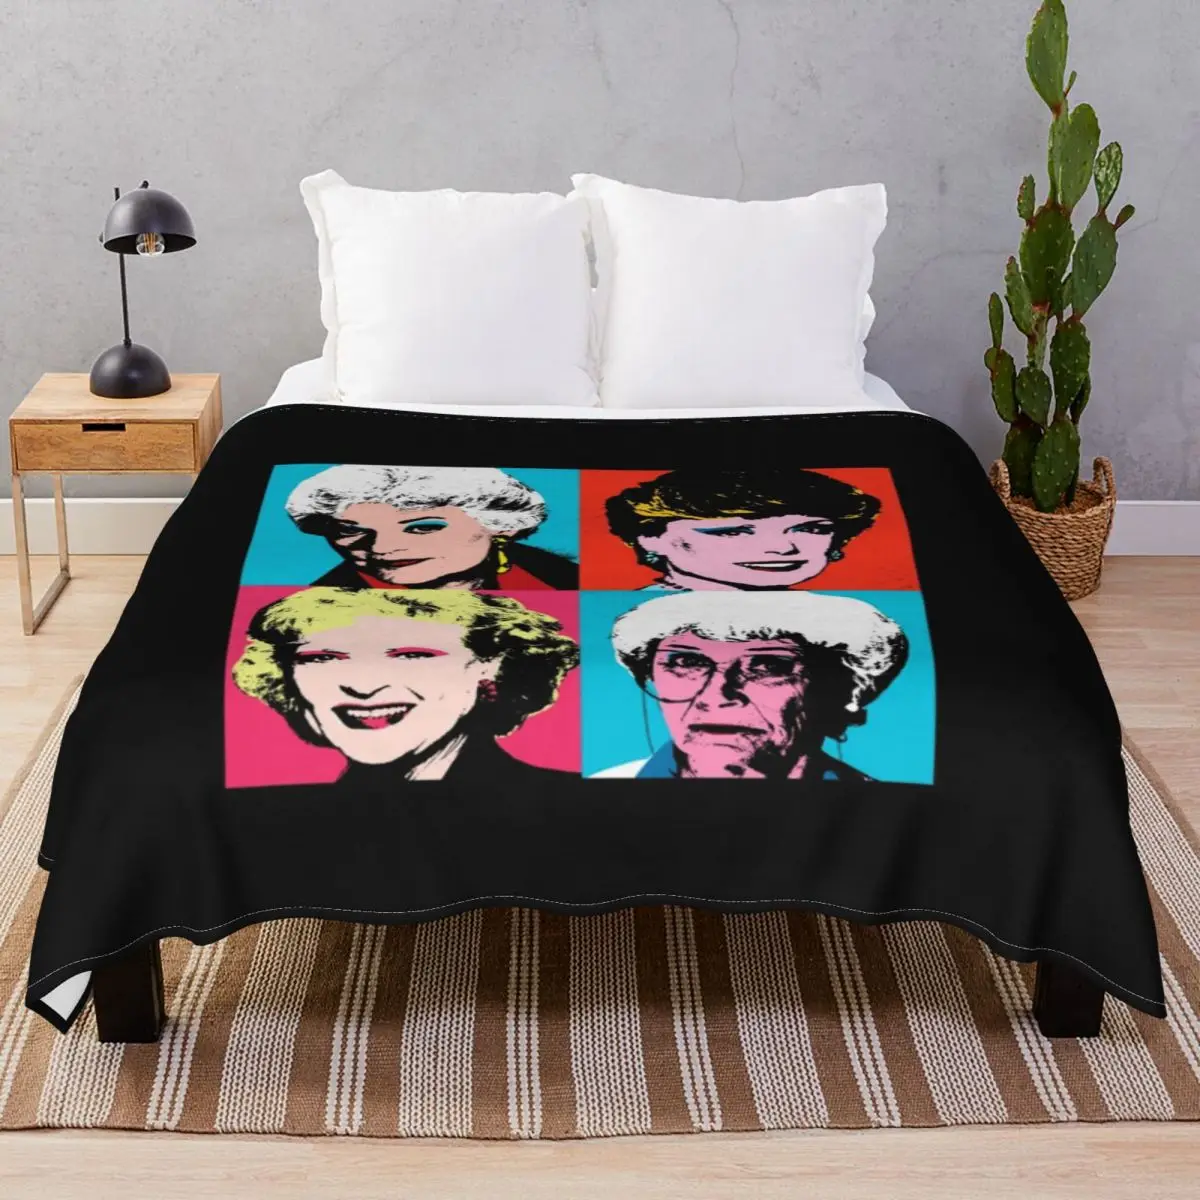 Golden Warhol Girls Blankets Fleece Summer Multi-function Unisex Throw Blanket for Bedding Home Couch Travel Cinema